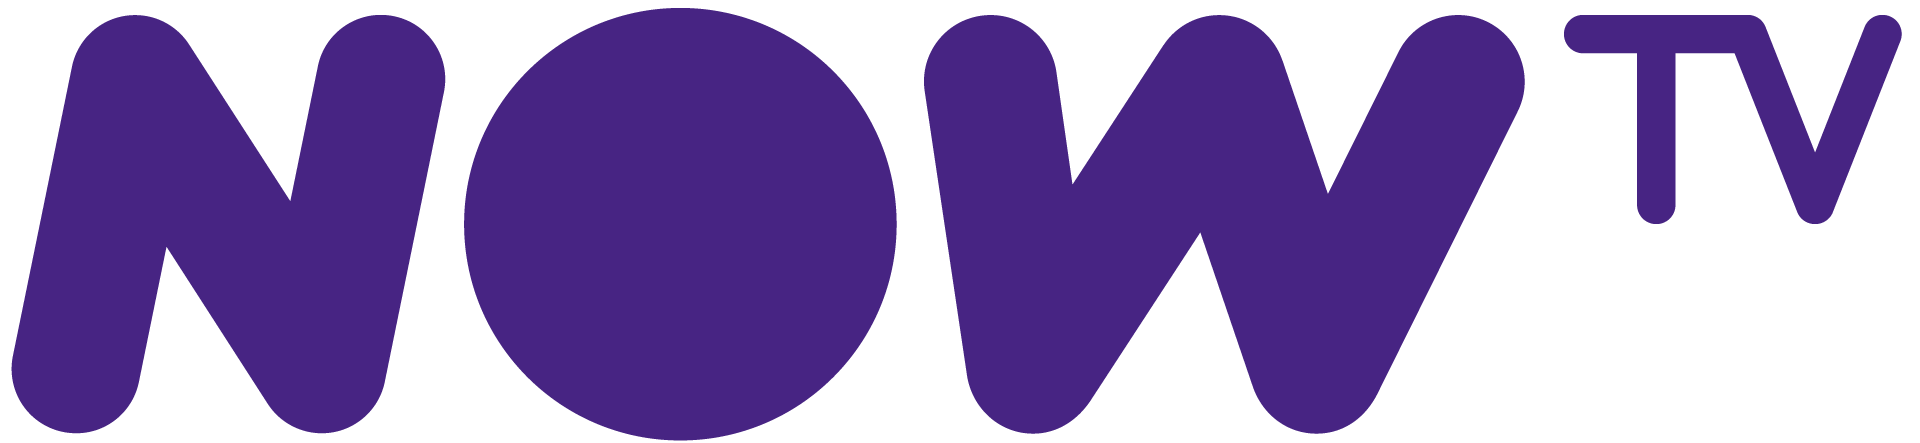 Now the TV logo